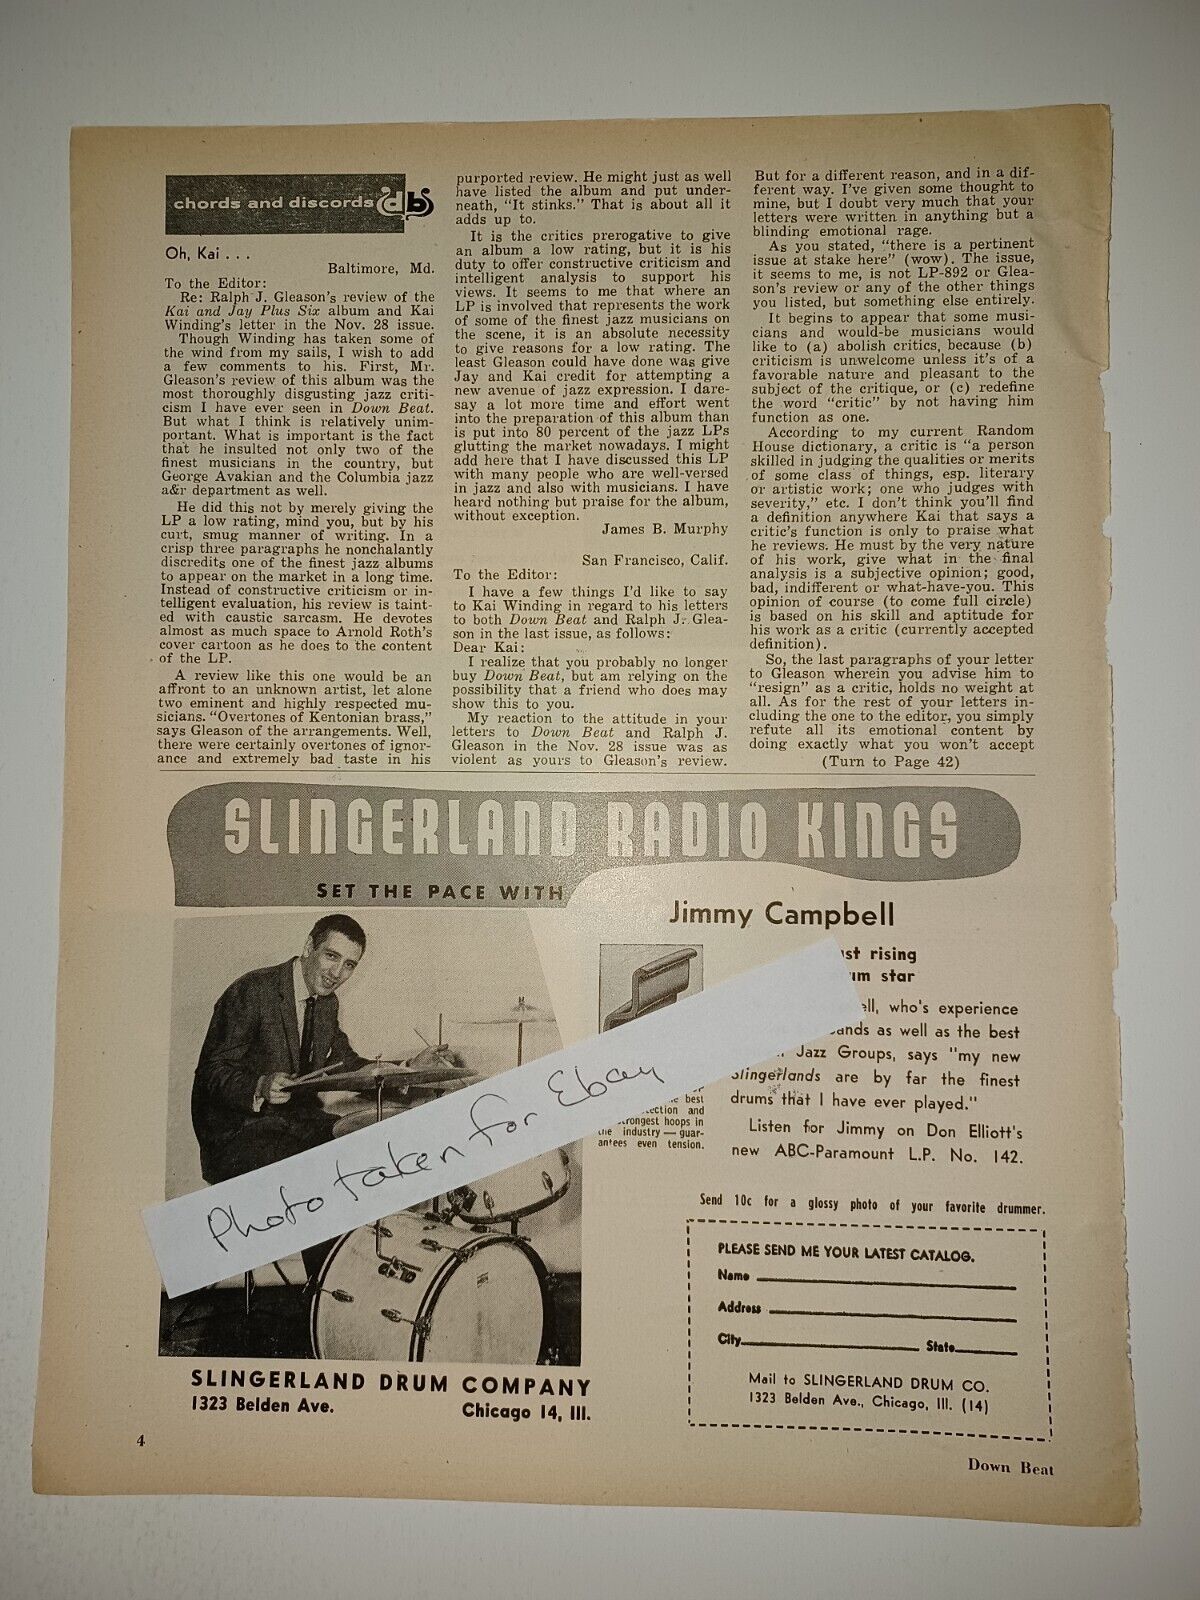 Jimmy Campbell Slingerland Radio Kings Drums 1956 8x11 Magazine Ad